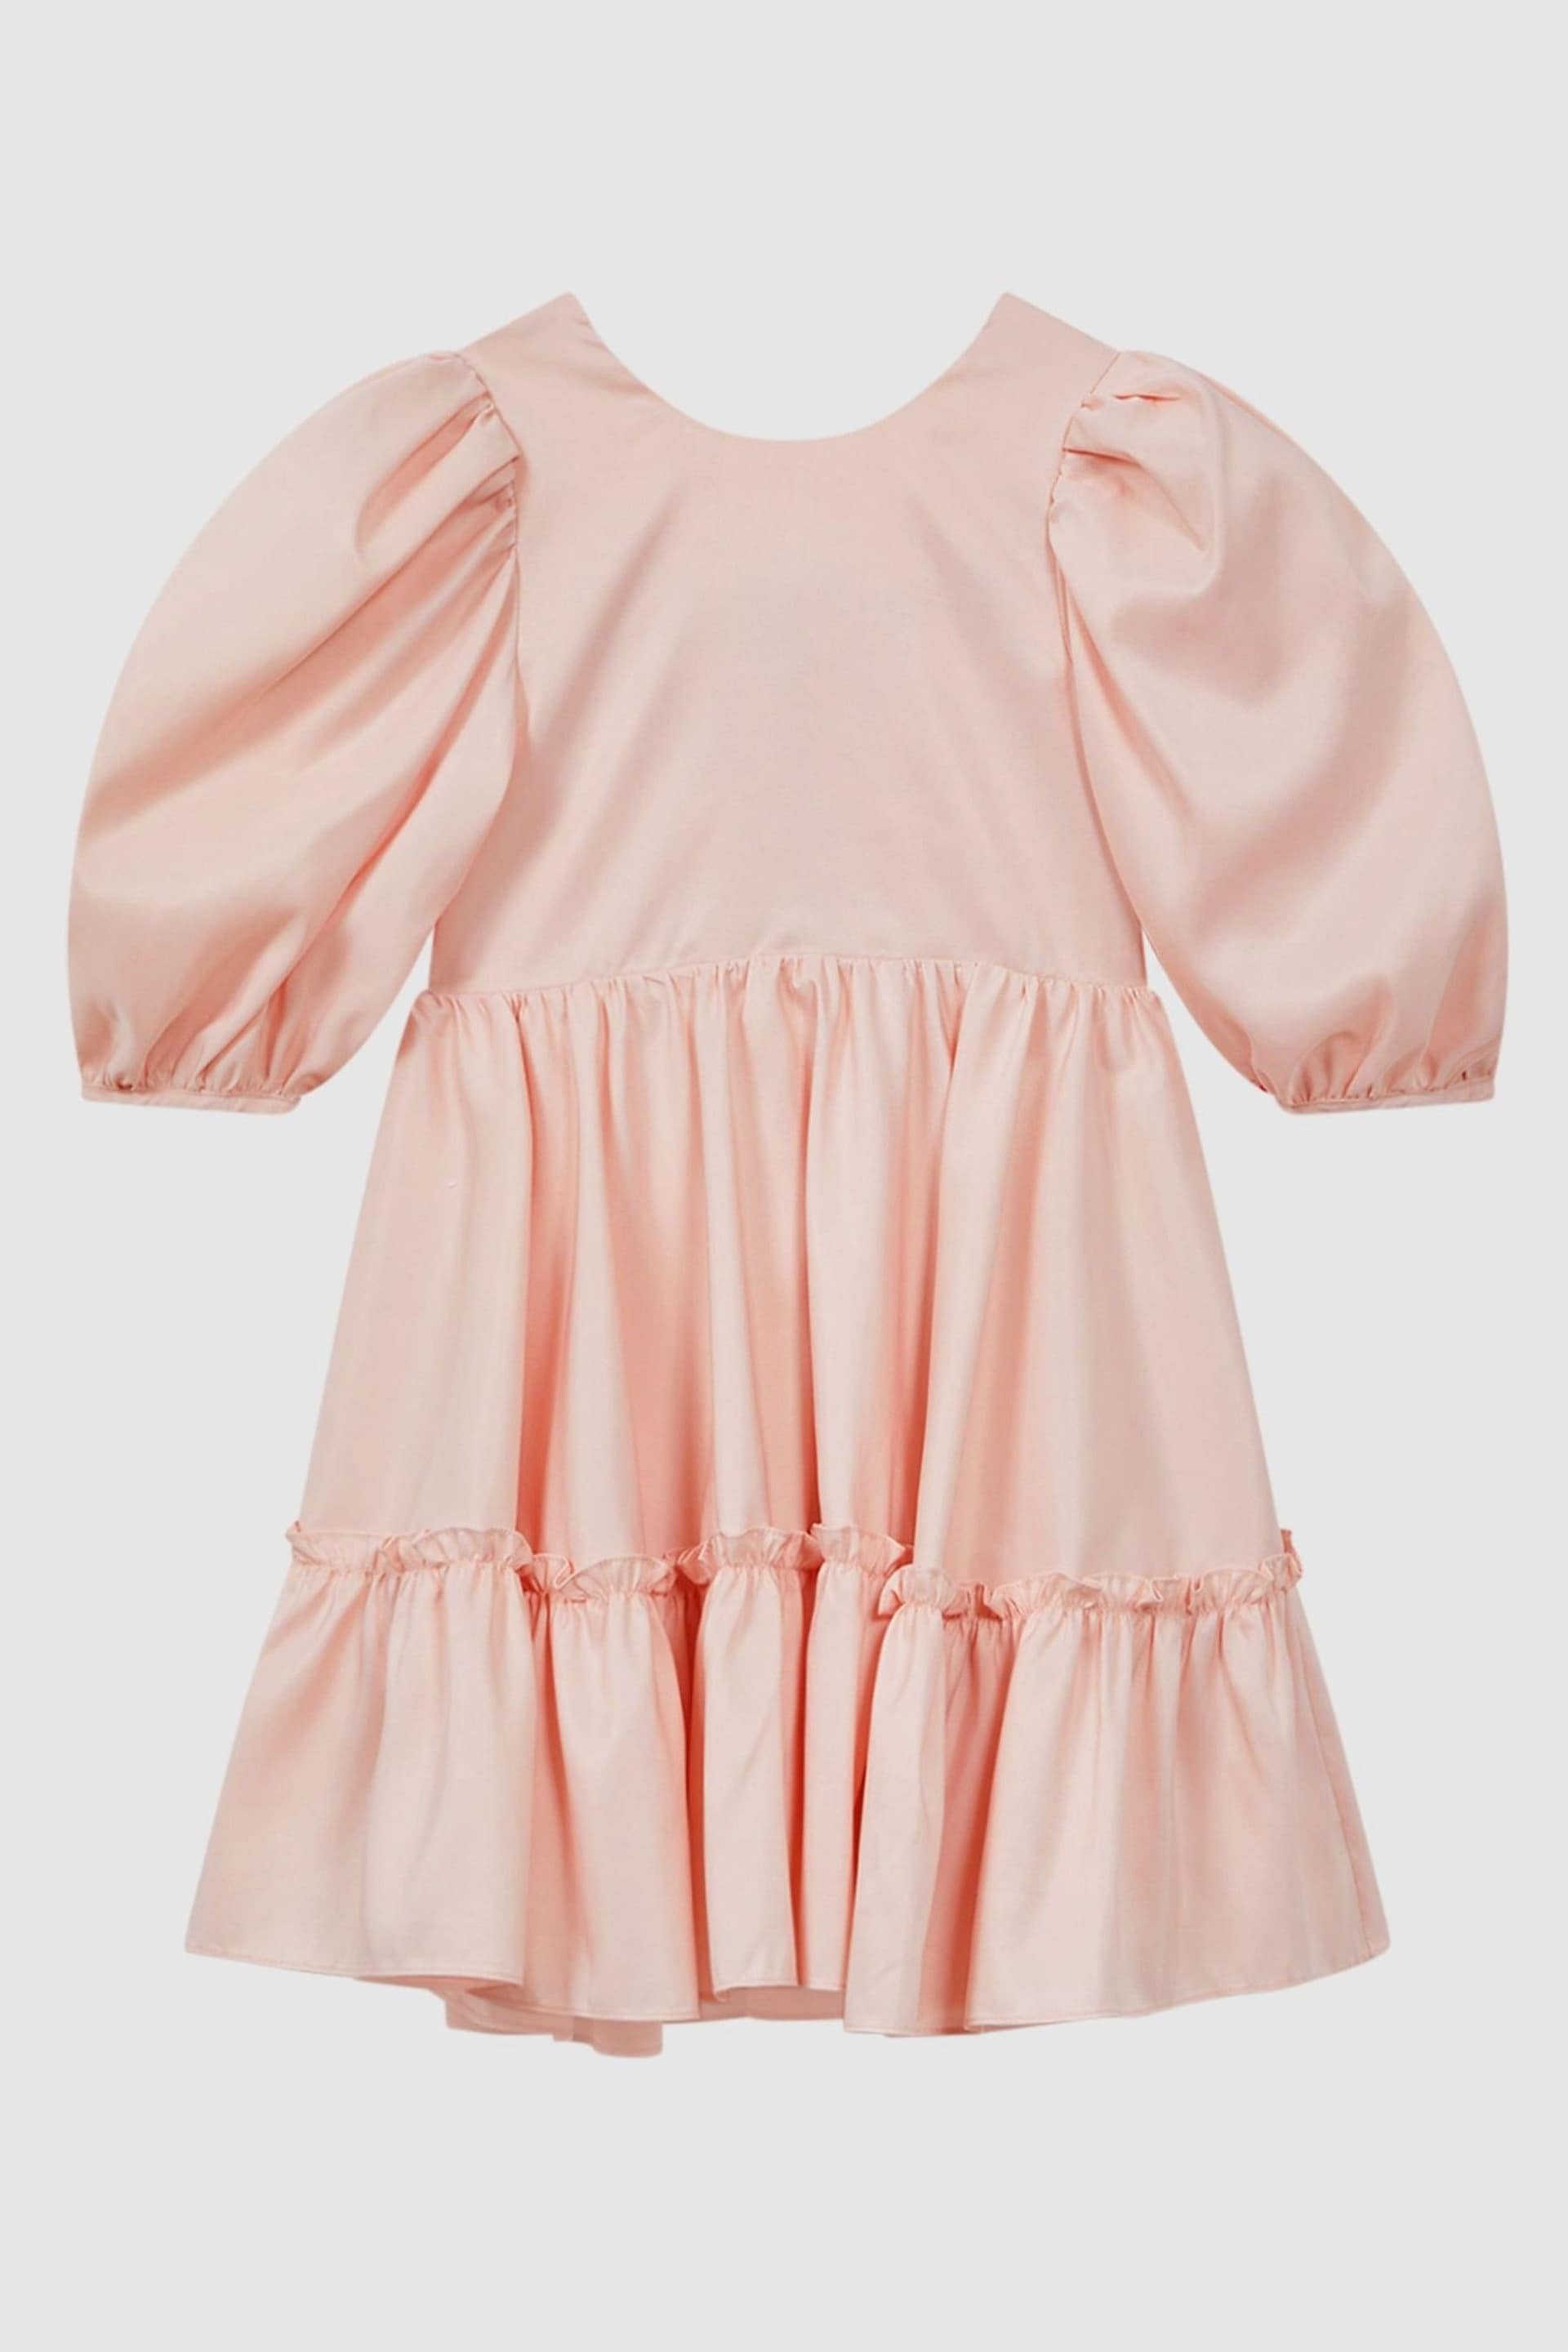 Reiss Pink Toby Teen Puff Sleeve Ruffle Mini Dress - Image 2 of 7